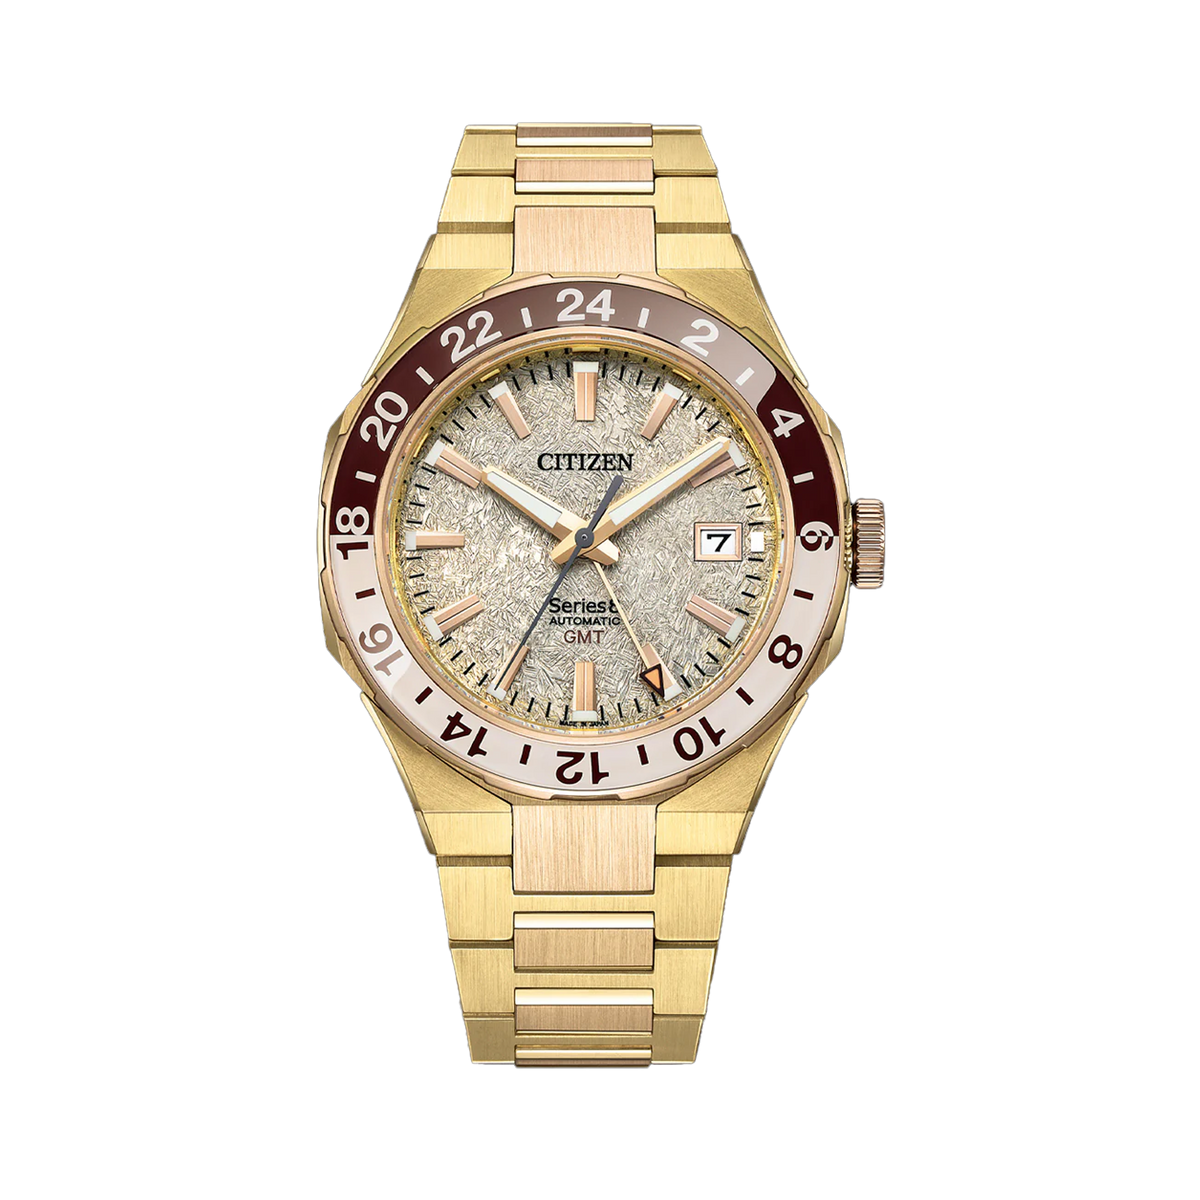 Citizen Men's Champagne Automatic GMT Watch NB6032-53P